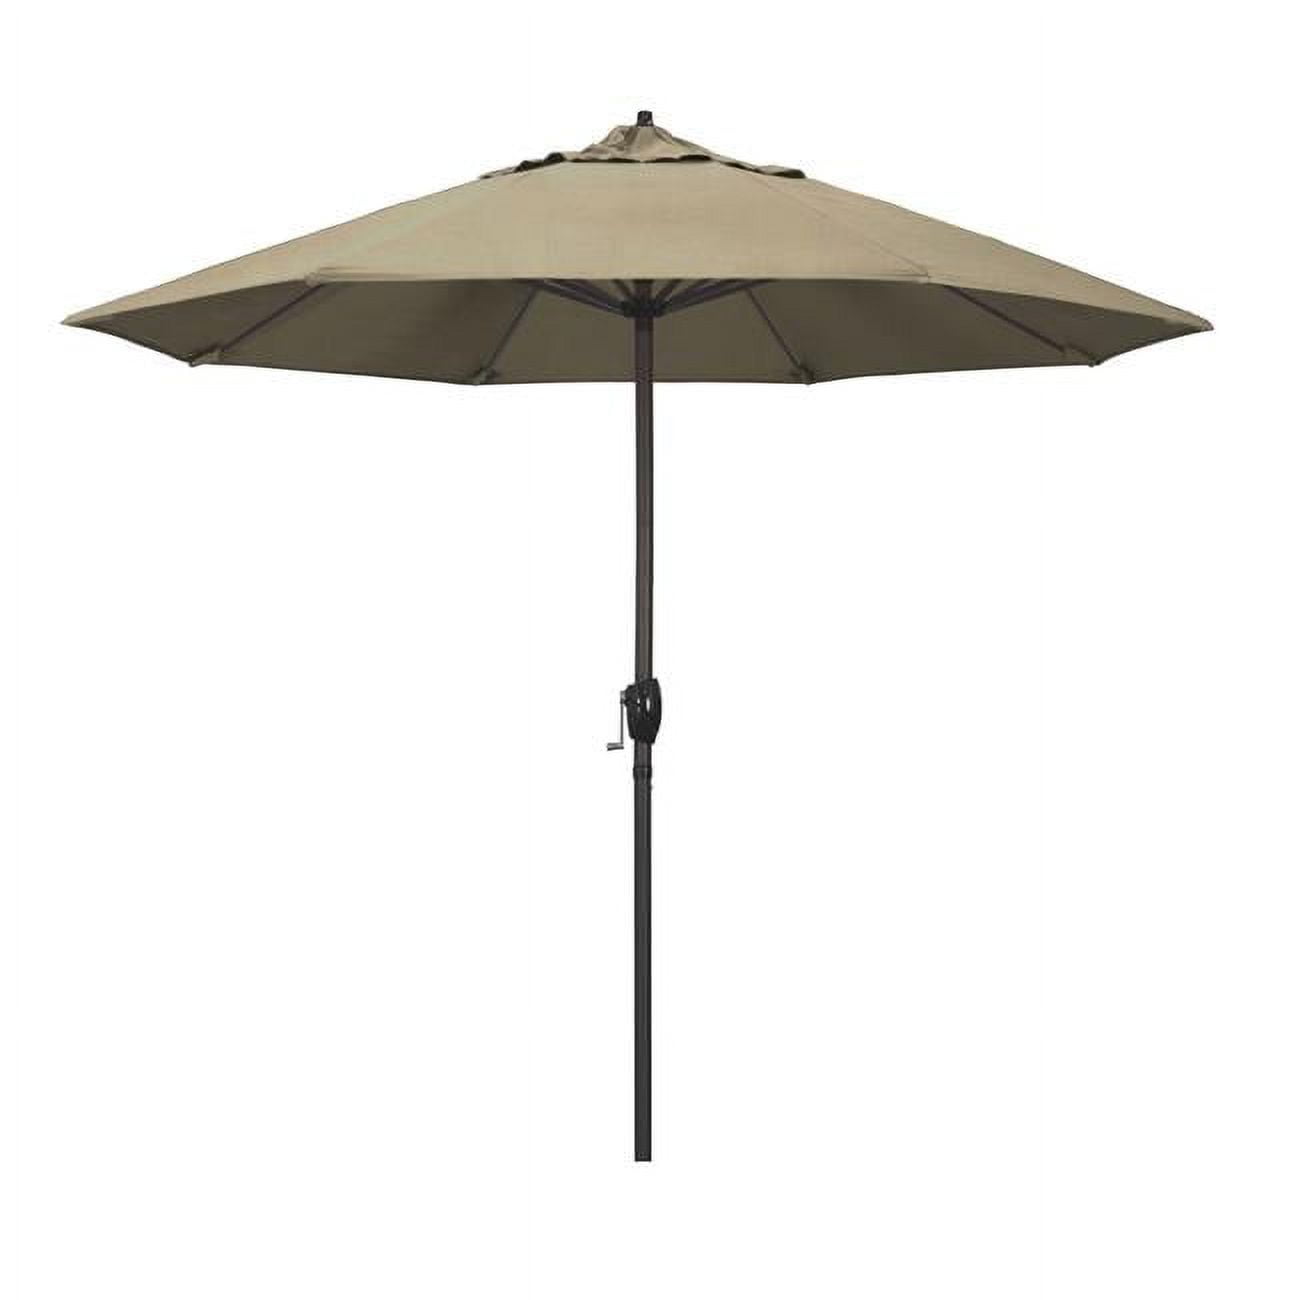 Ata908117-5476 9 Ft. Casa Series Patio Bronze Auto Tilt Crank Lift - Sunbrella 1a Heather Beige Fabric